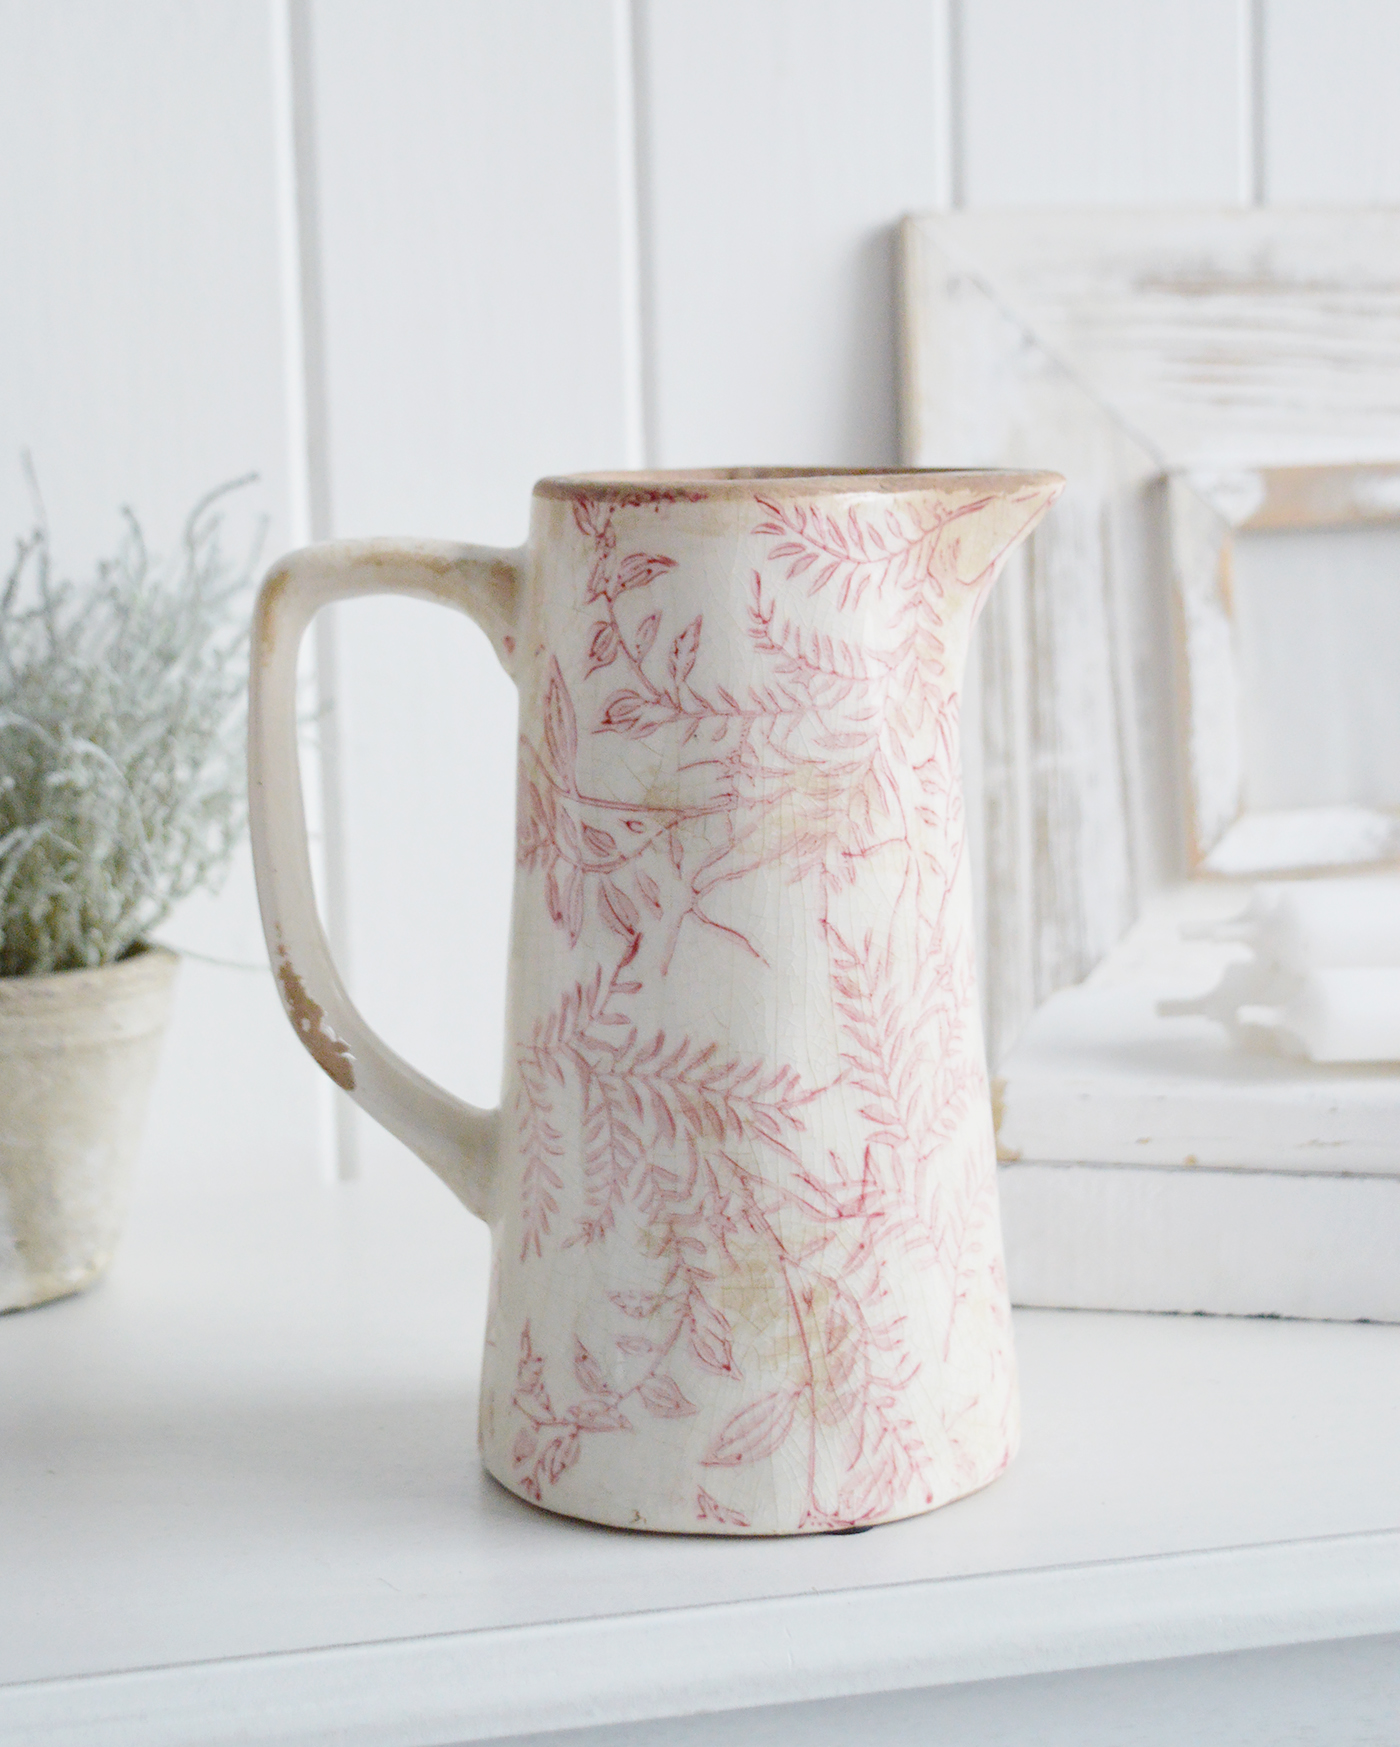 Tolland Vintage Jug - pink ceramics for New England, Country, Farmhouse and coastal home interior decor